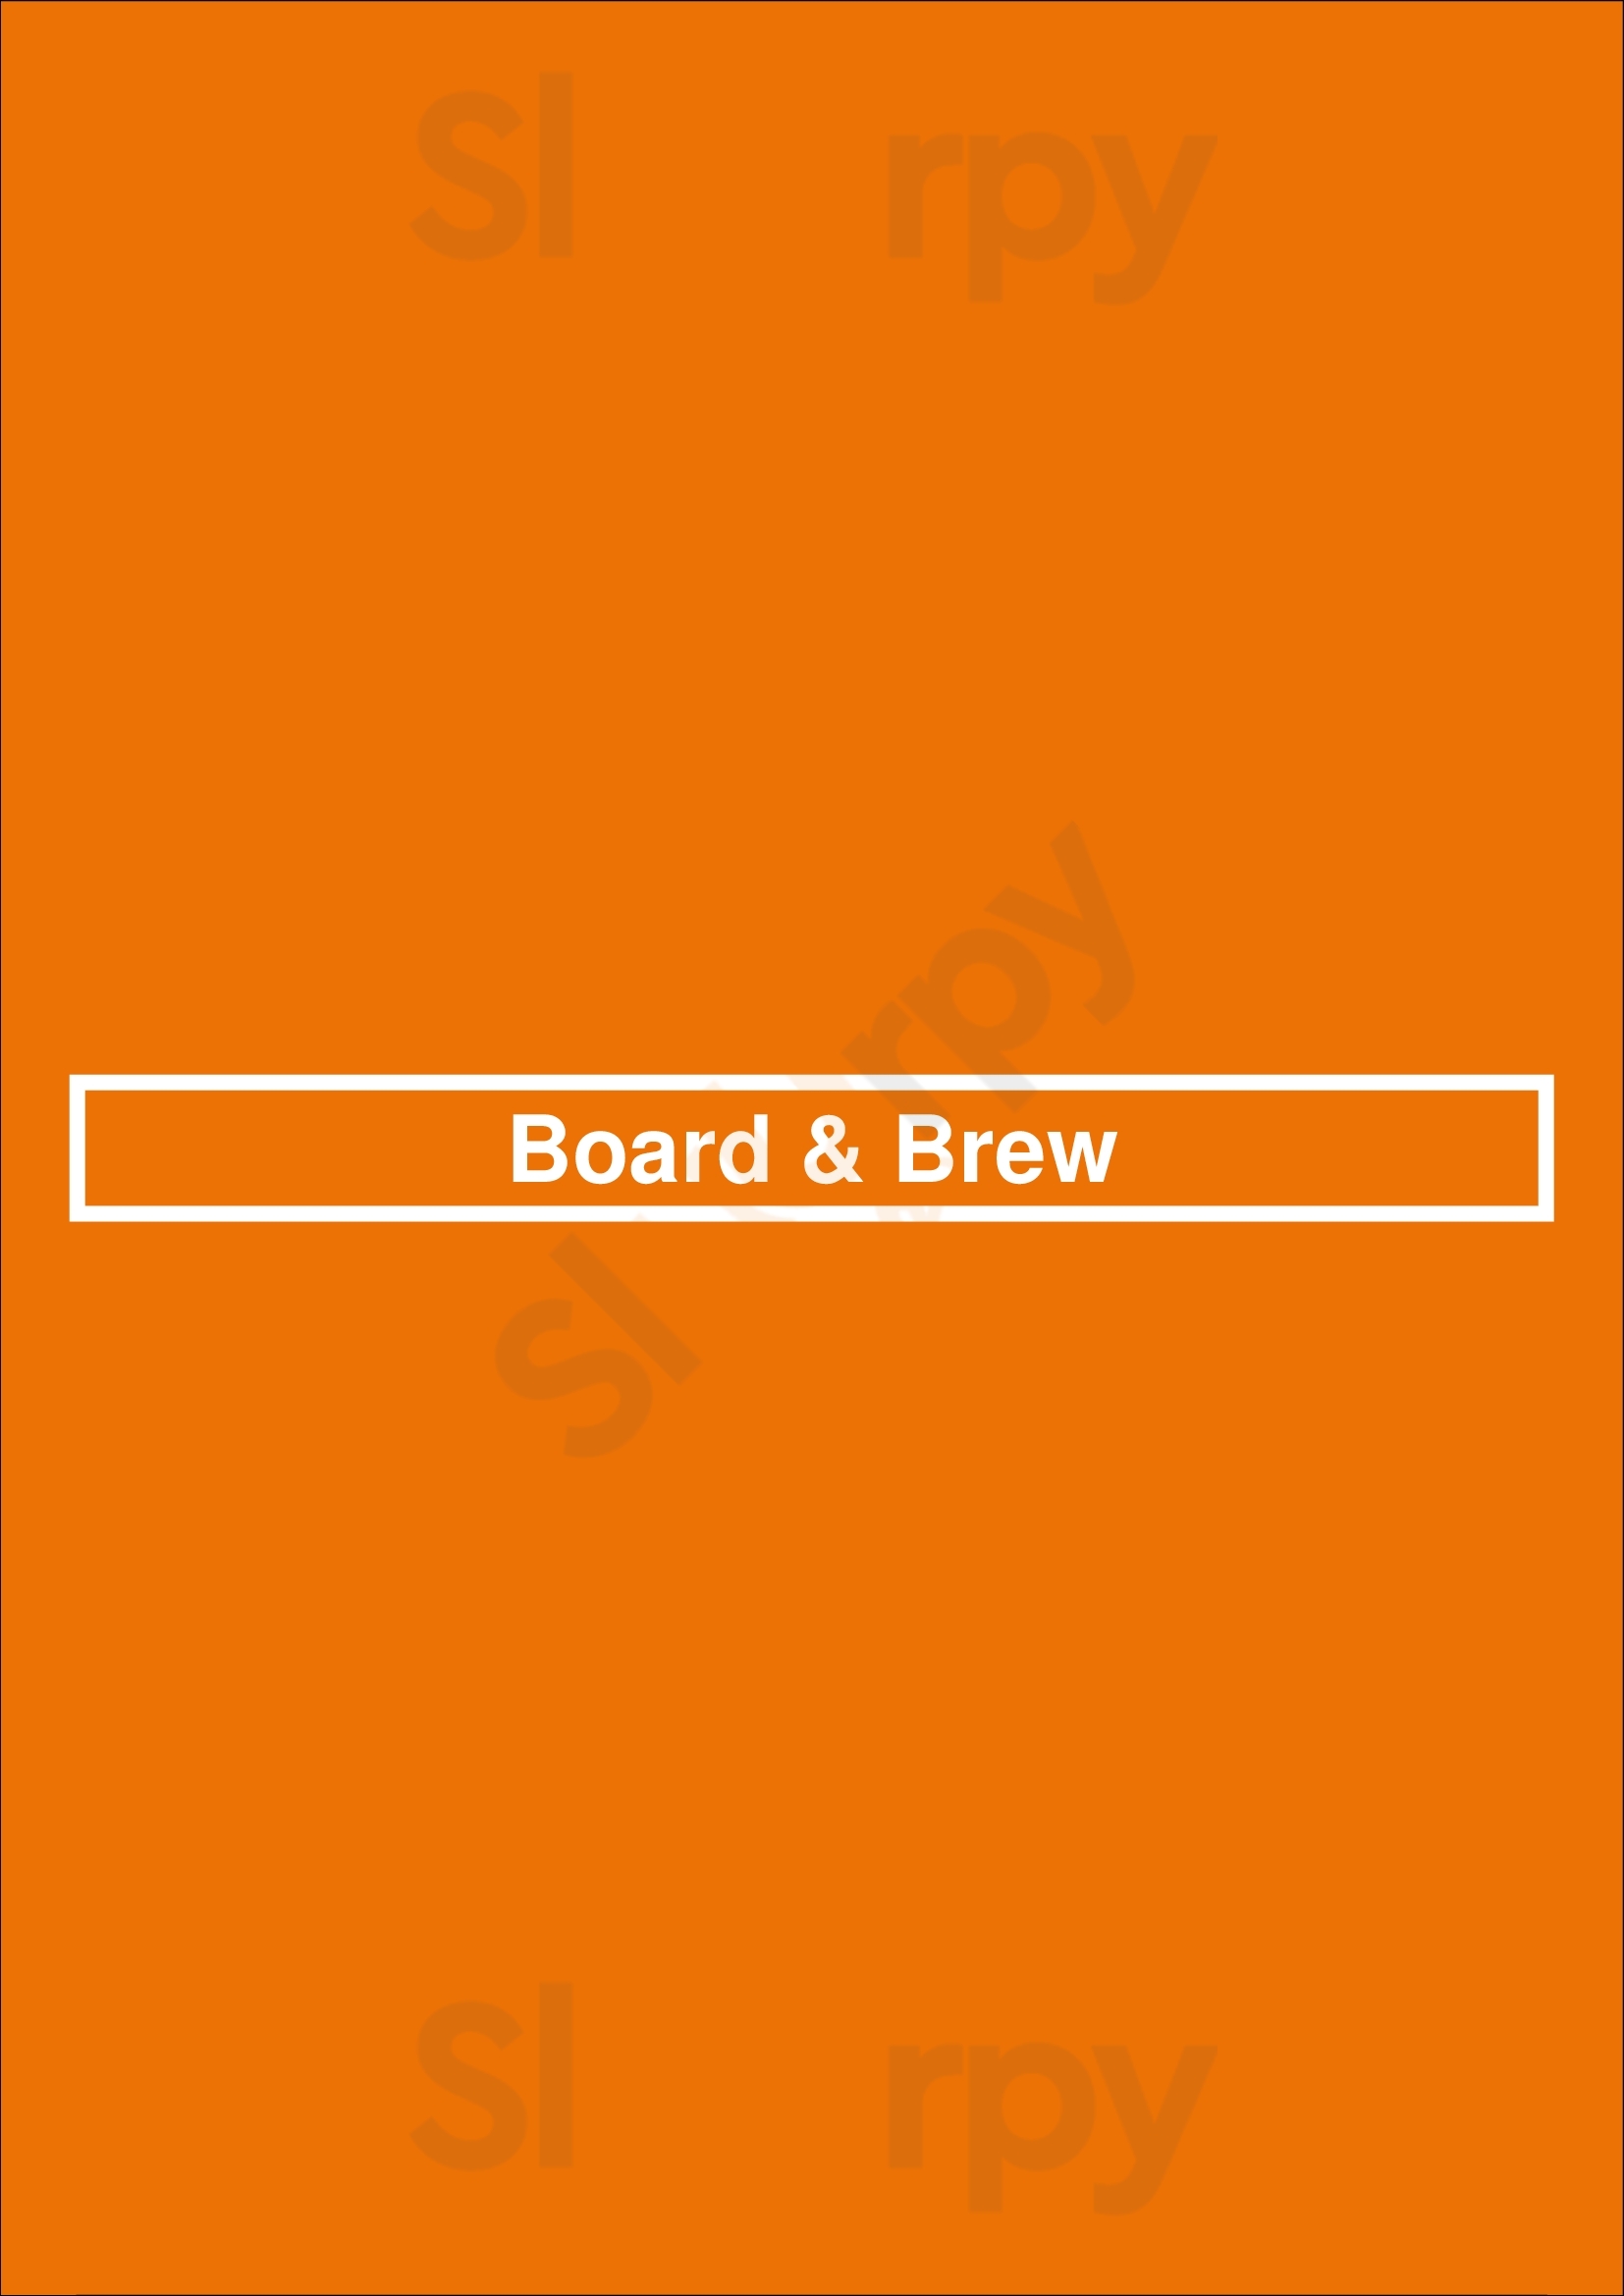 Board & Brew Huntington Beach Menu - 1